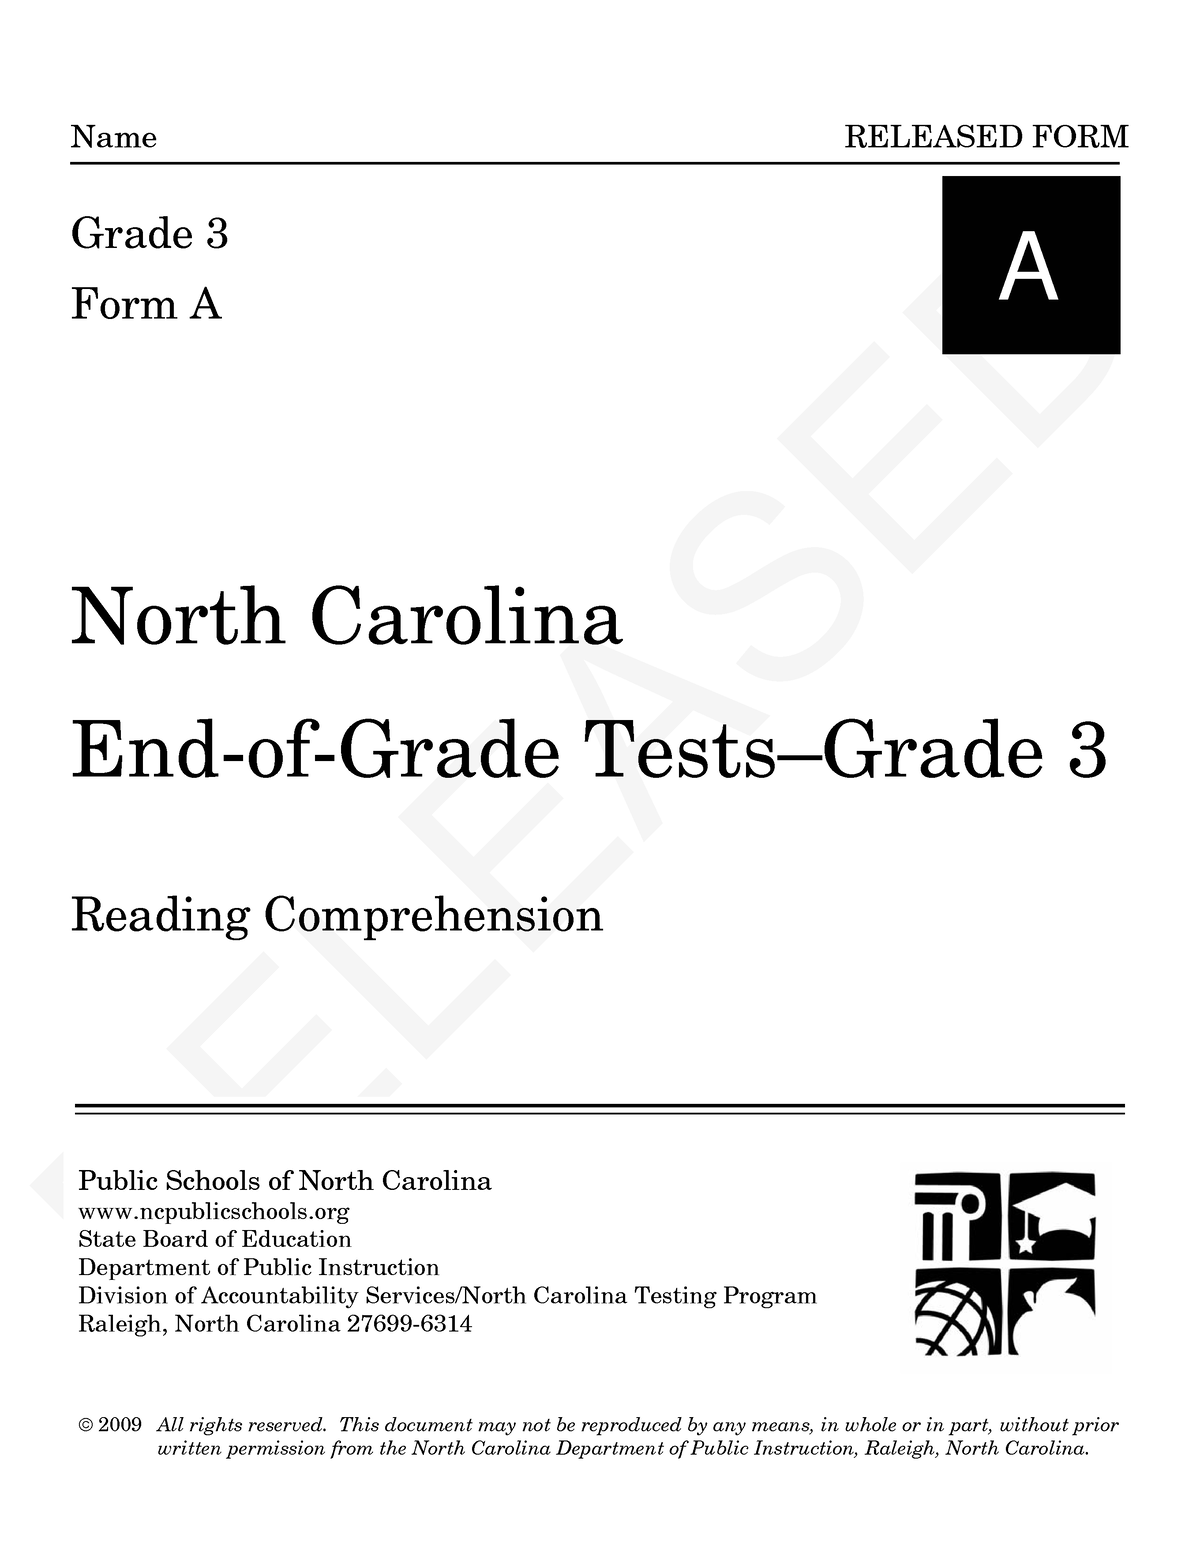 north-carolina-end-of-grade-tests-grade-3-released-public-schools-of